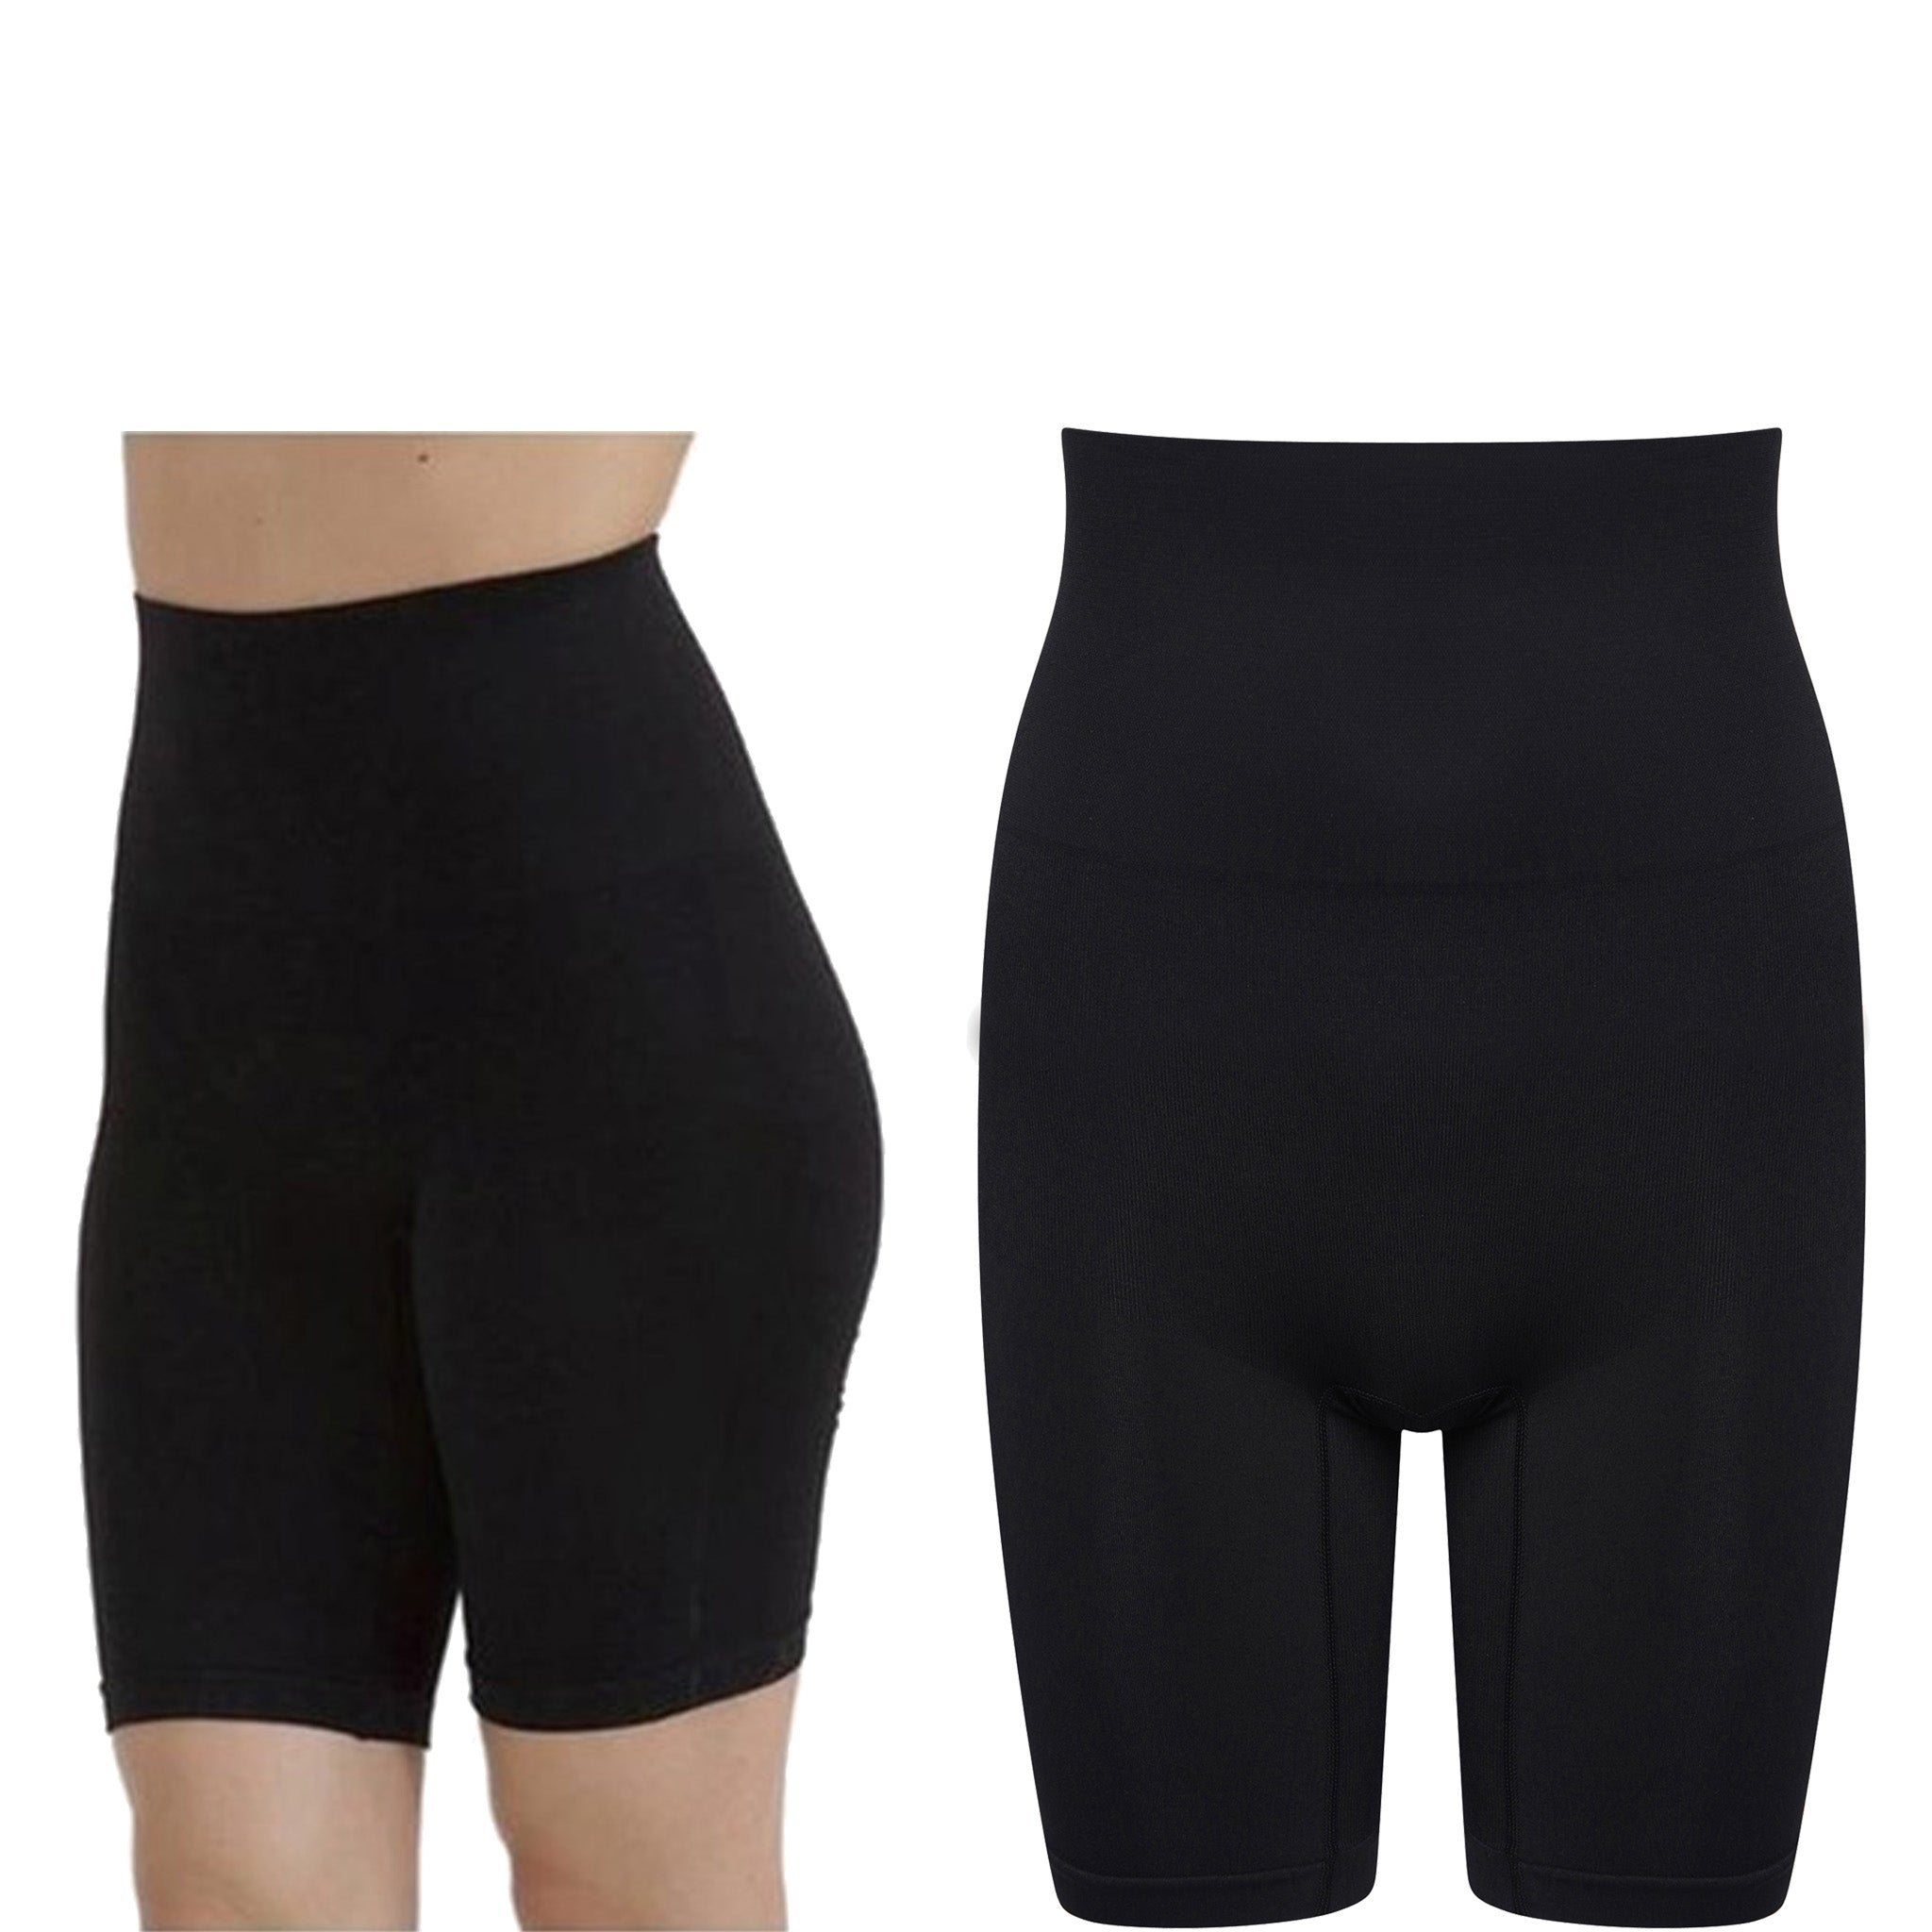 Thigh Control Shorts High Waist Cincher Seamless Shapewear Black